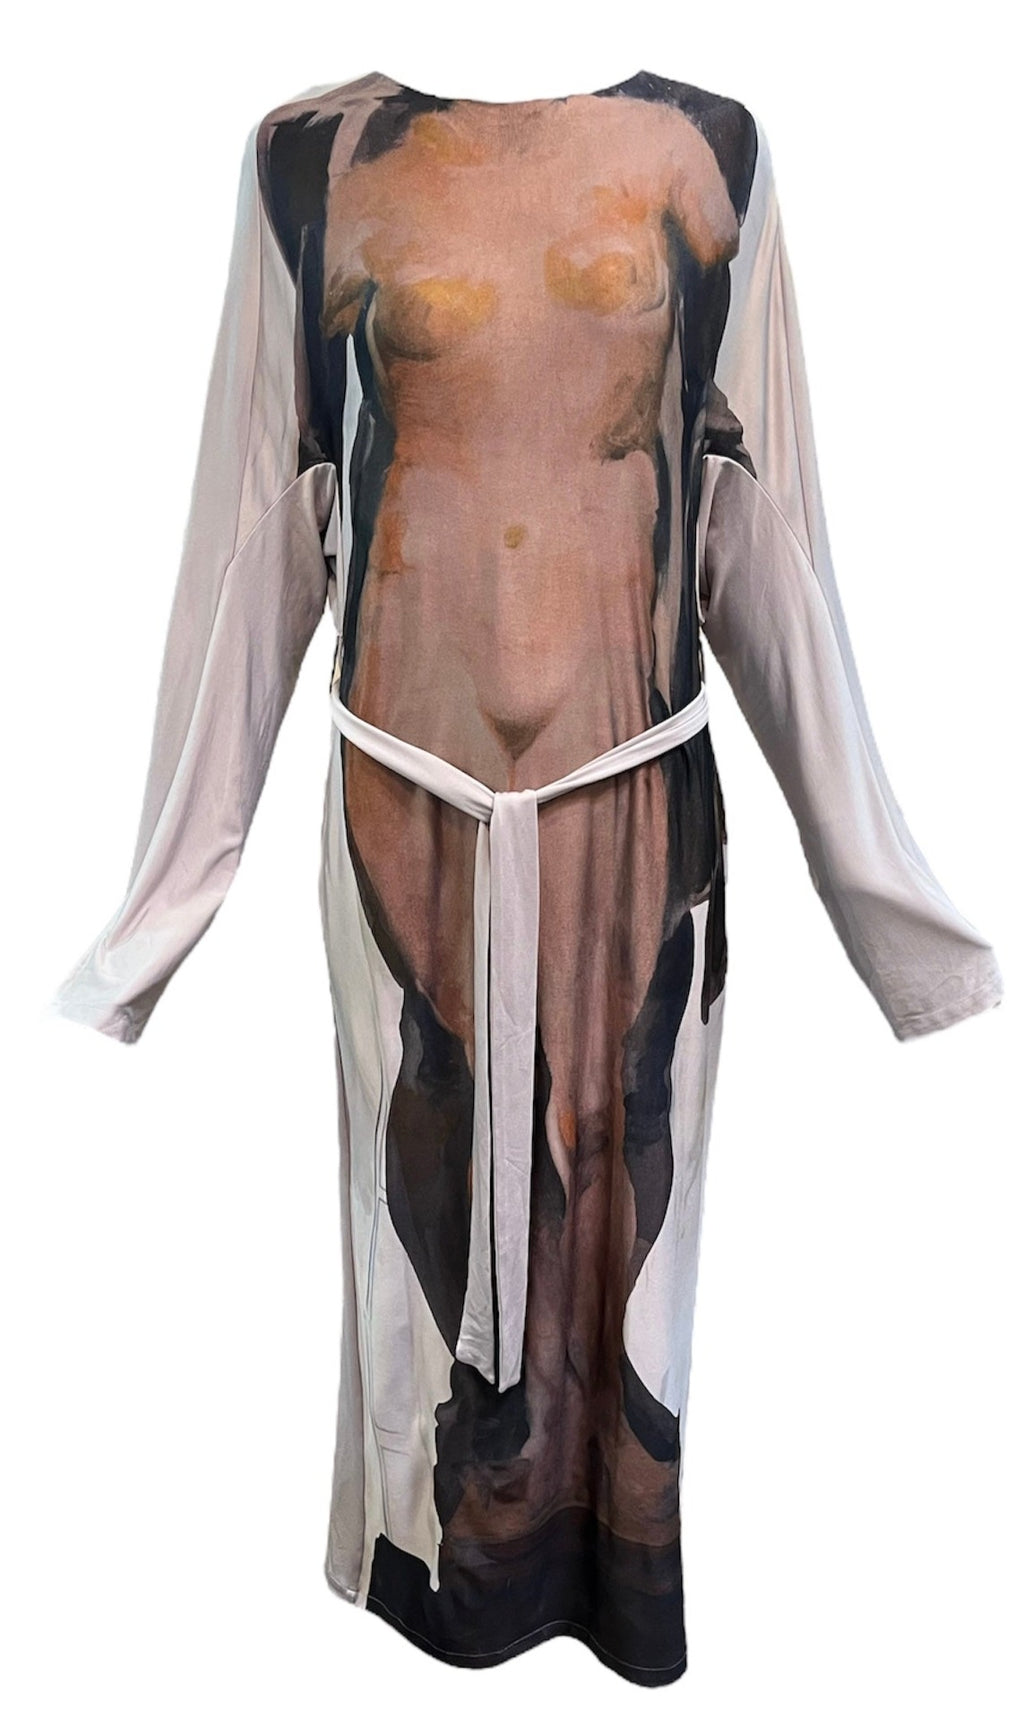 Ann Demeulemeester Nude Sculpture Silhouette Sheath Dress FRONT 1 of 5